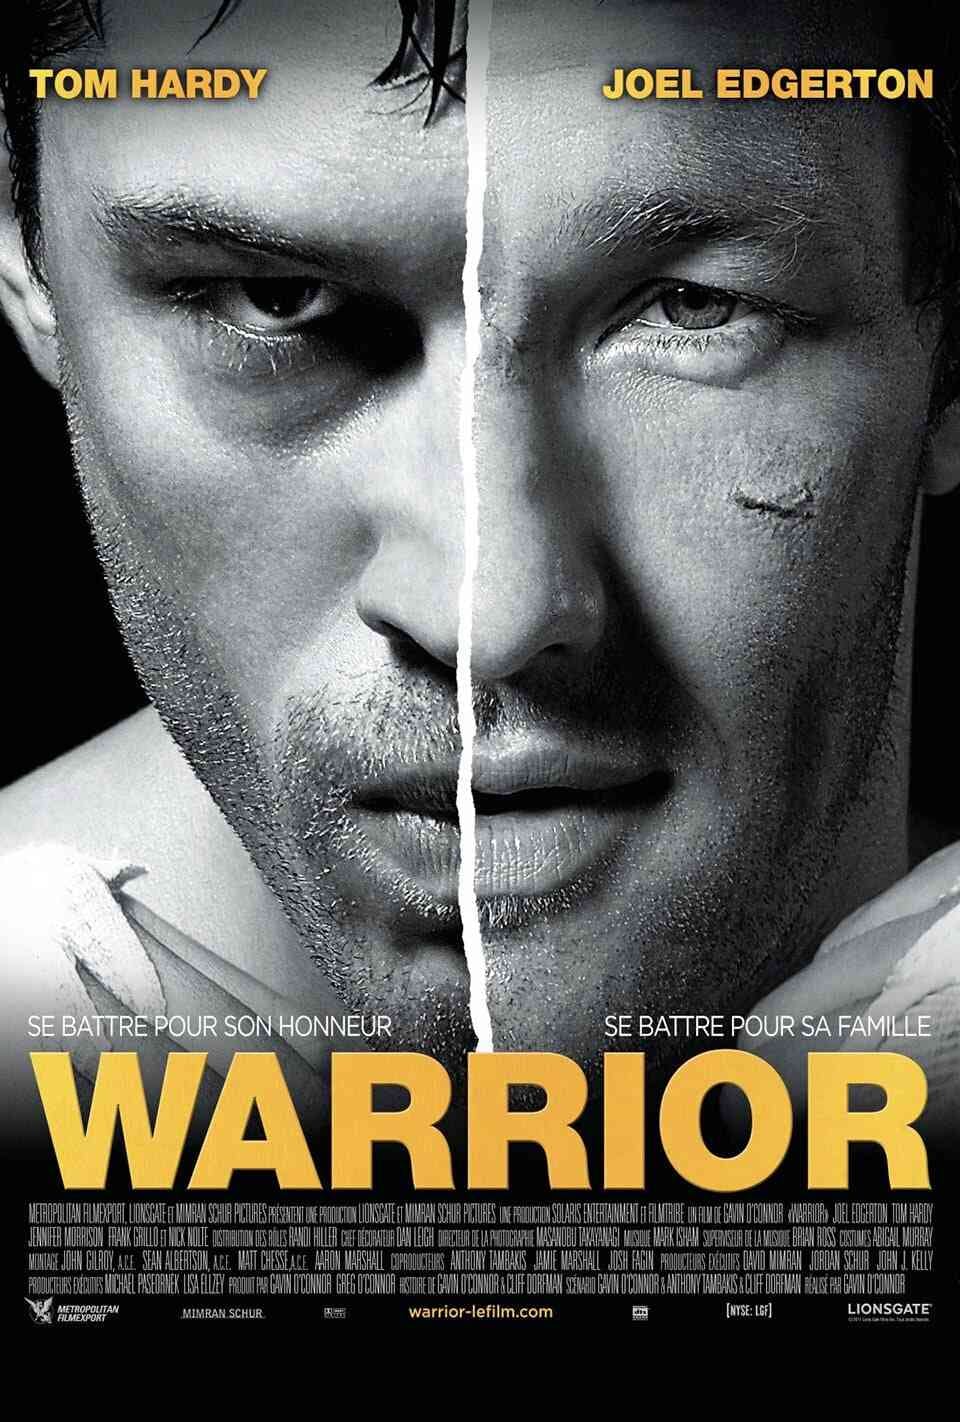 Read Warrior screenplay (poster)